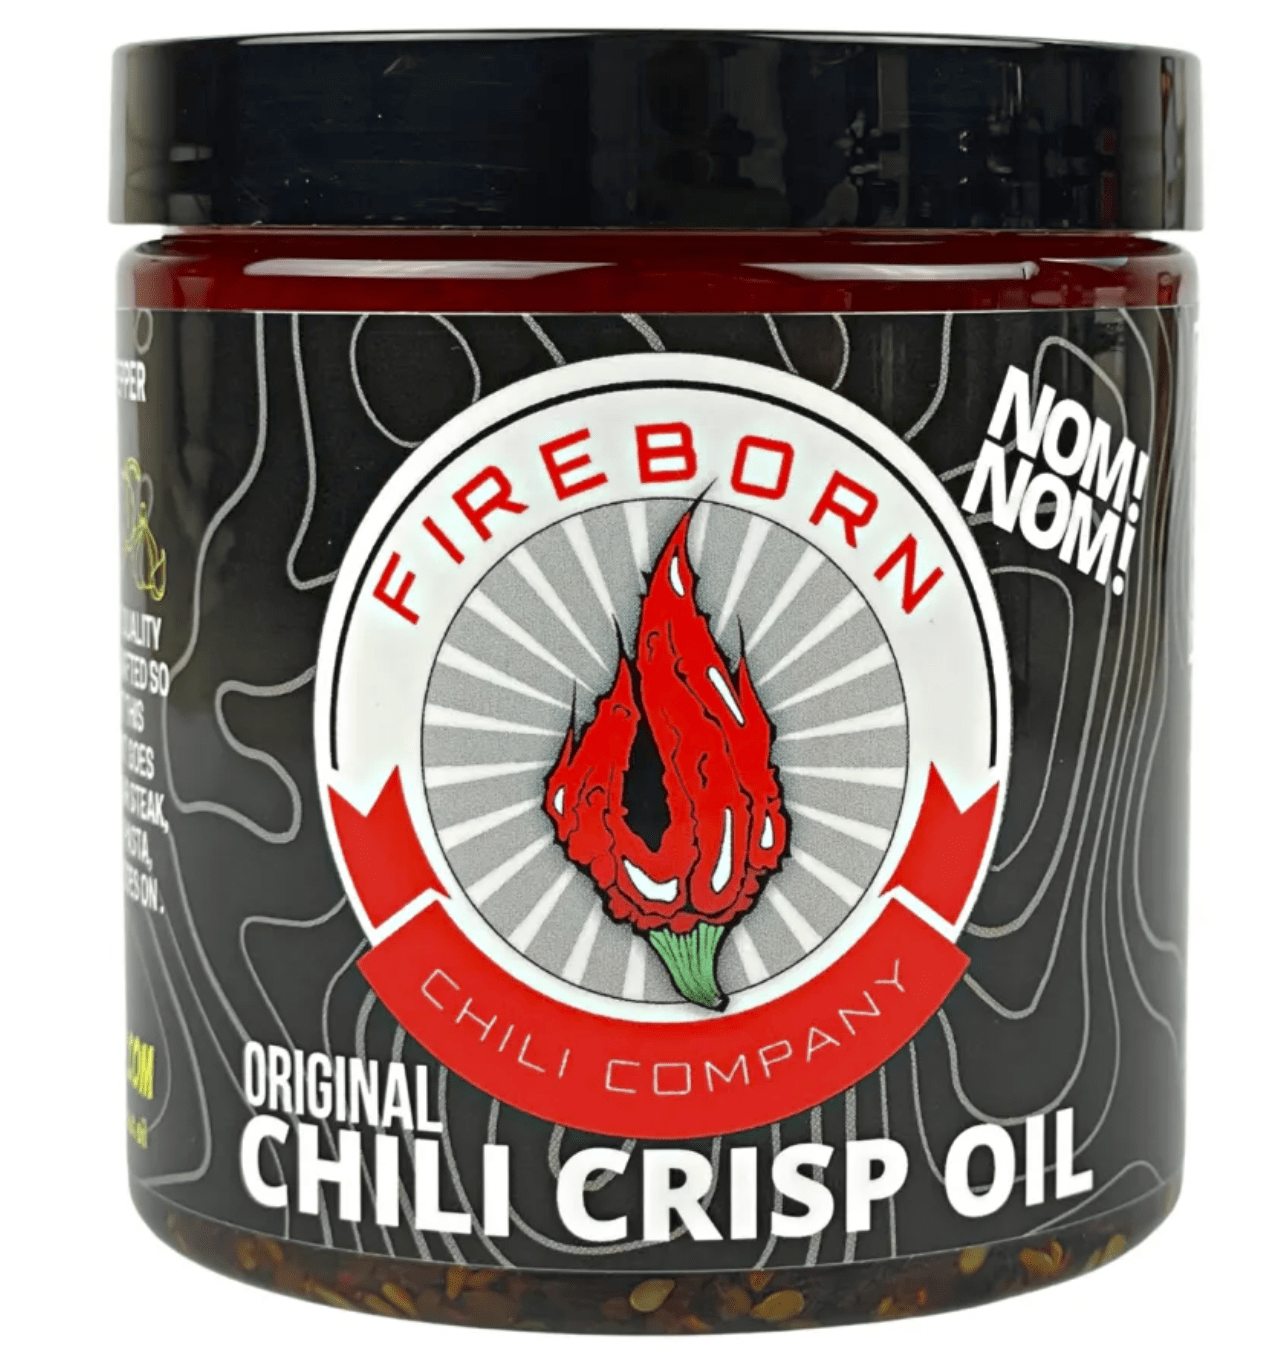 Fireborn Chili Company, LLC.